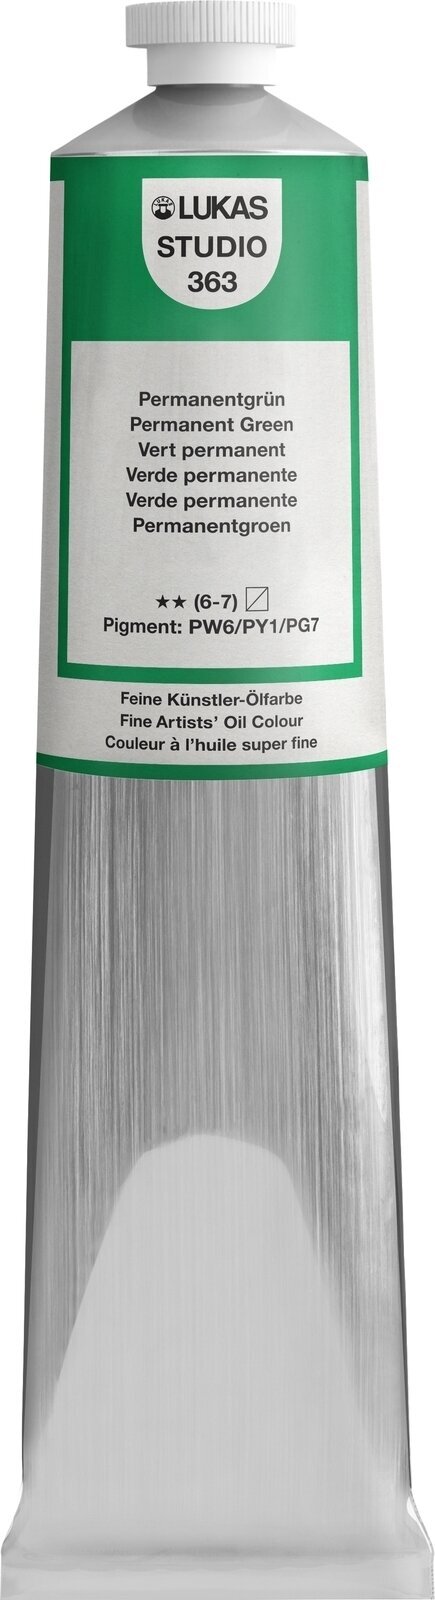 Ölfarbe Lukas Studio Oil Paint Aluminium Tube Ölgemälde Permanent Green 200 ml 1 Stck